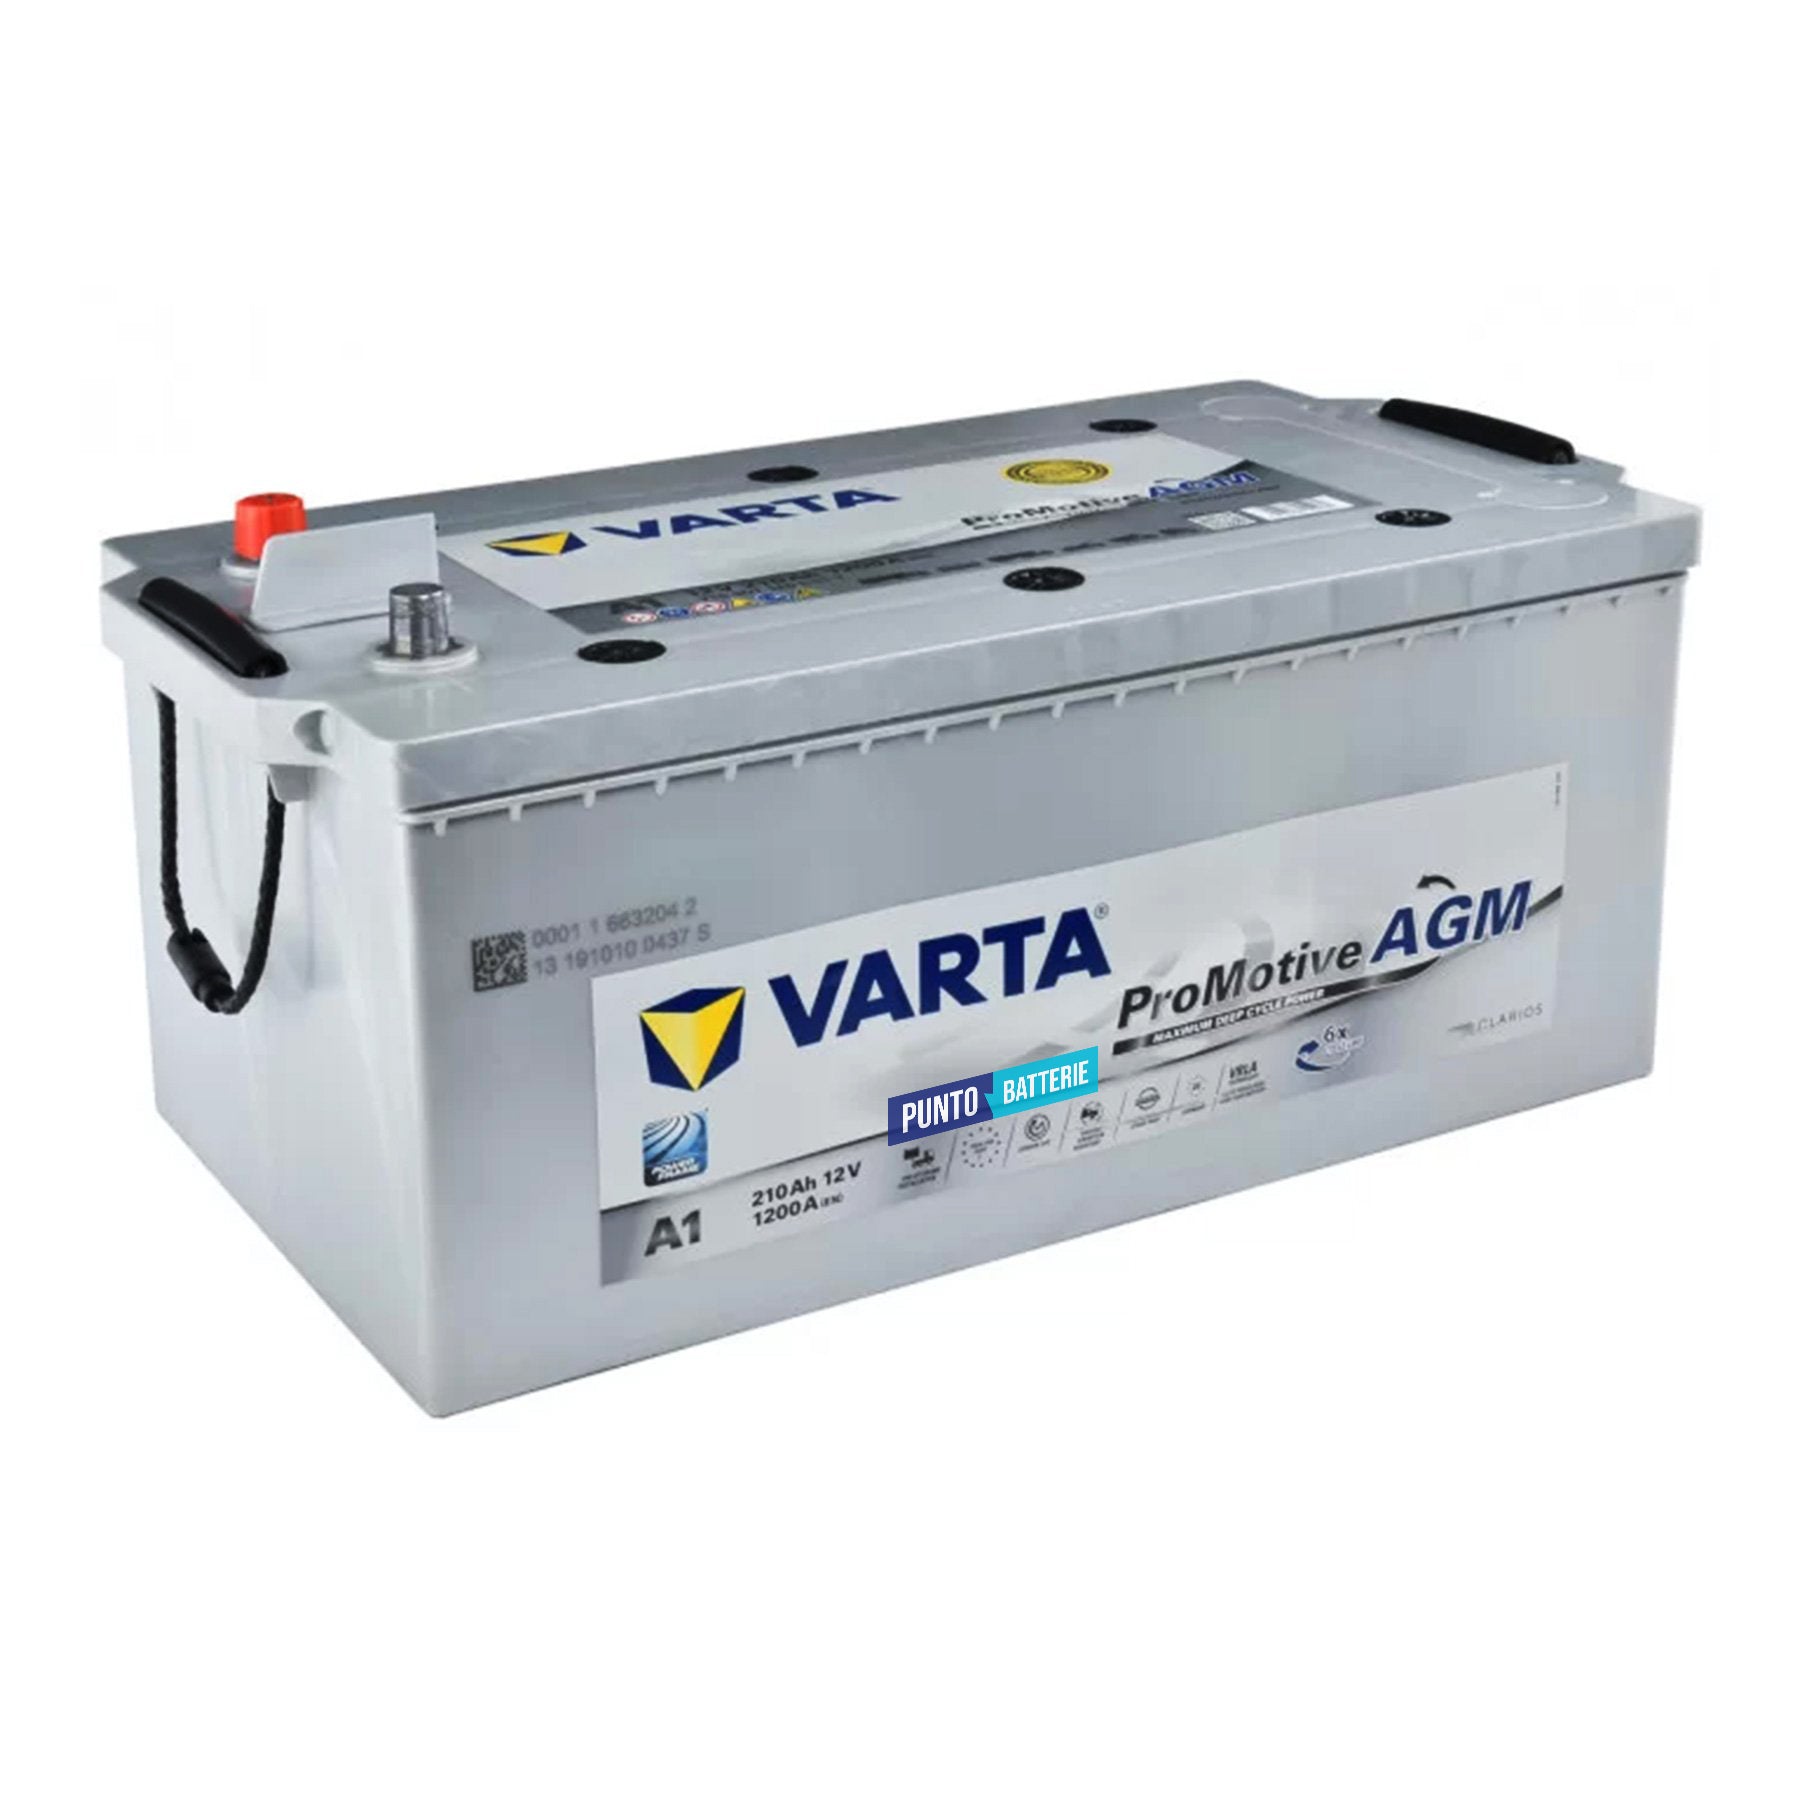 Varta LAD60A Professional Deep Cycle AGM-Batterie 60Ah VRLA